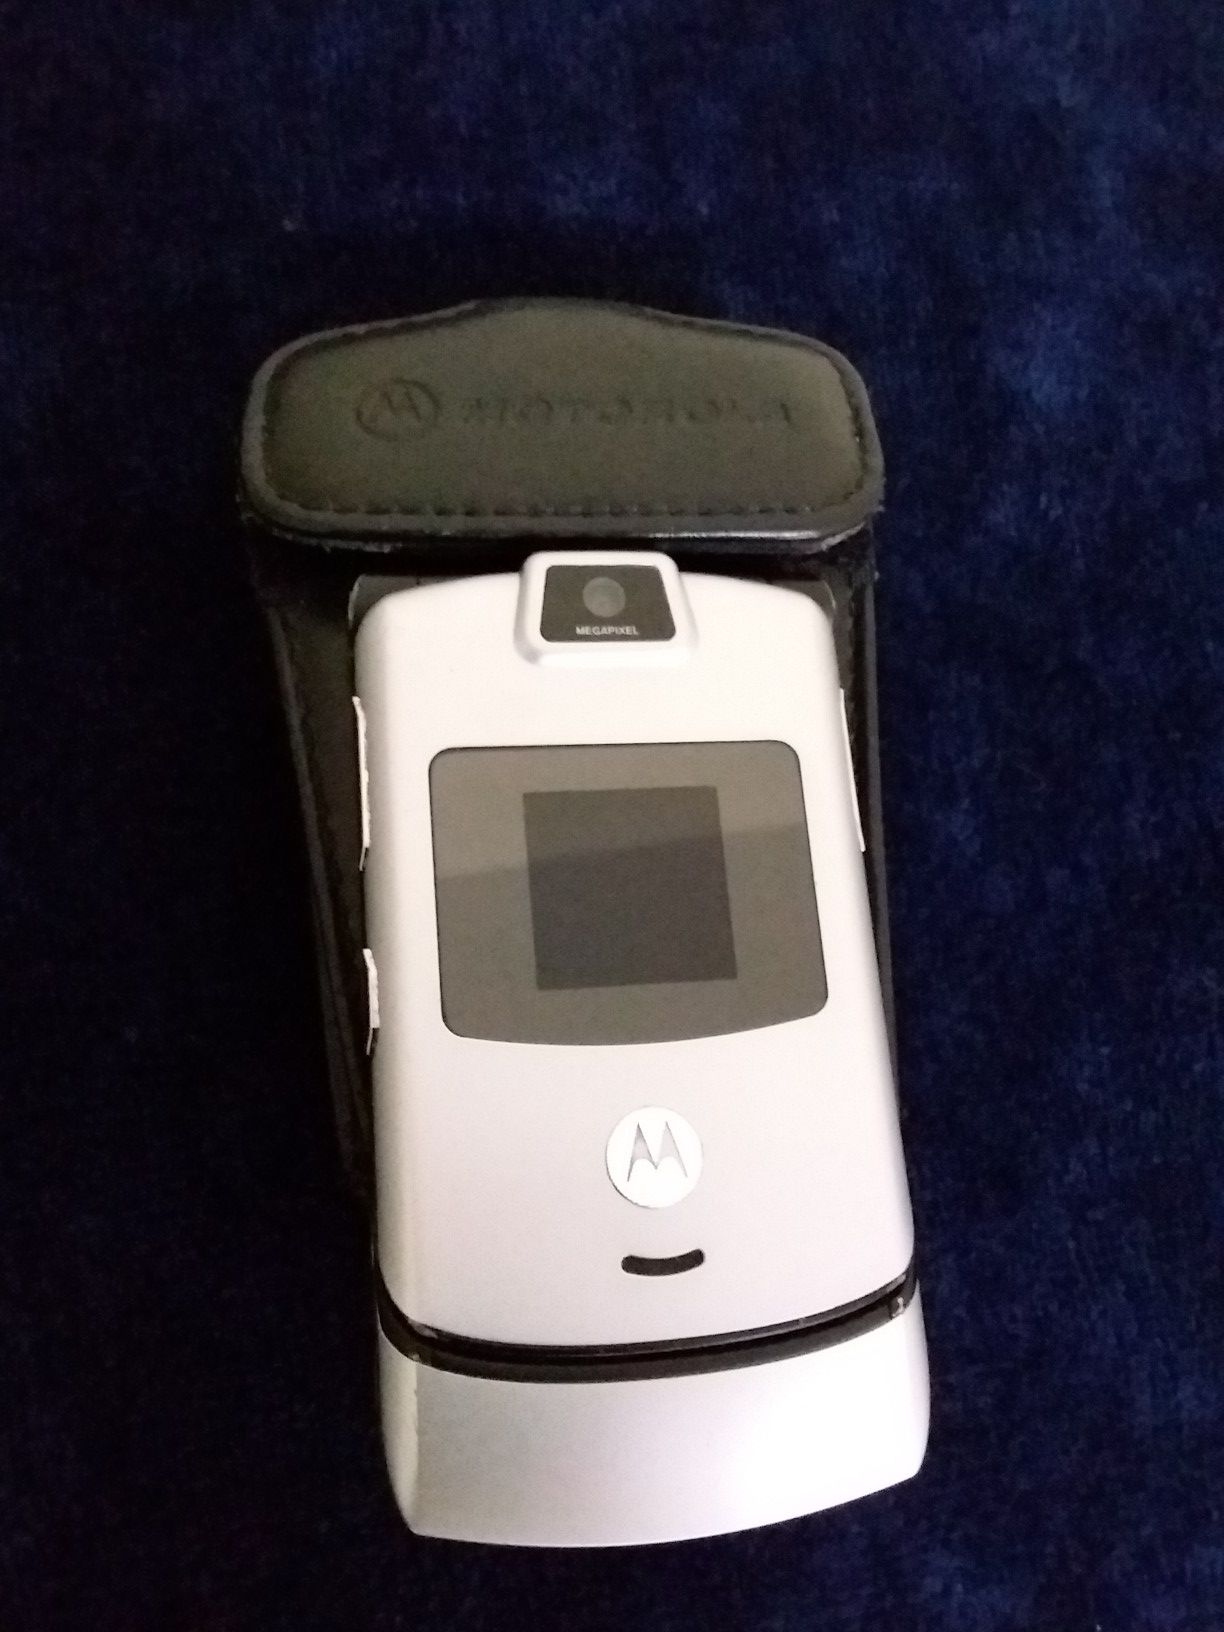 Verizon Motorola RAZR V3M GSM Flip Phone with pouch